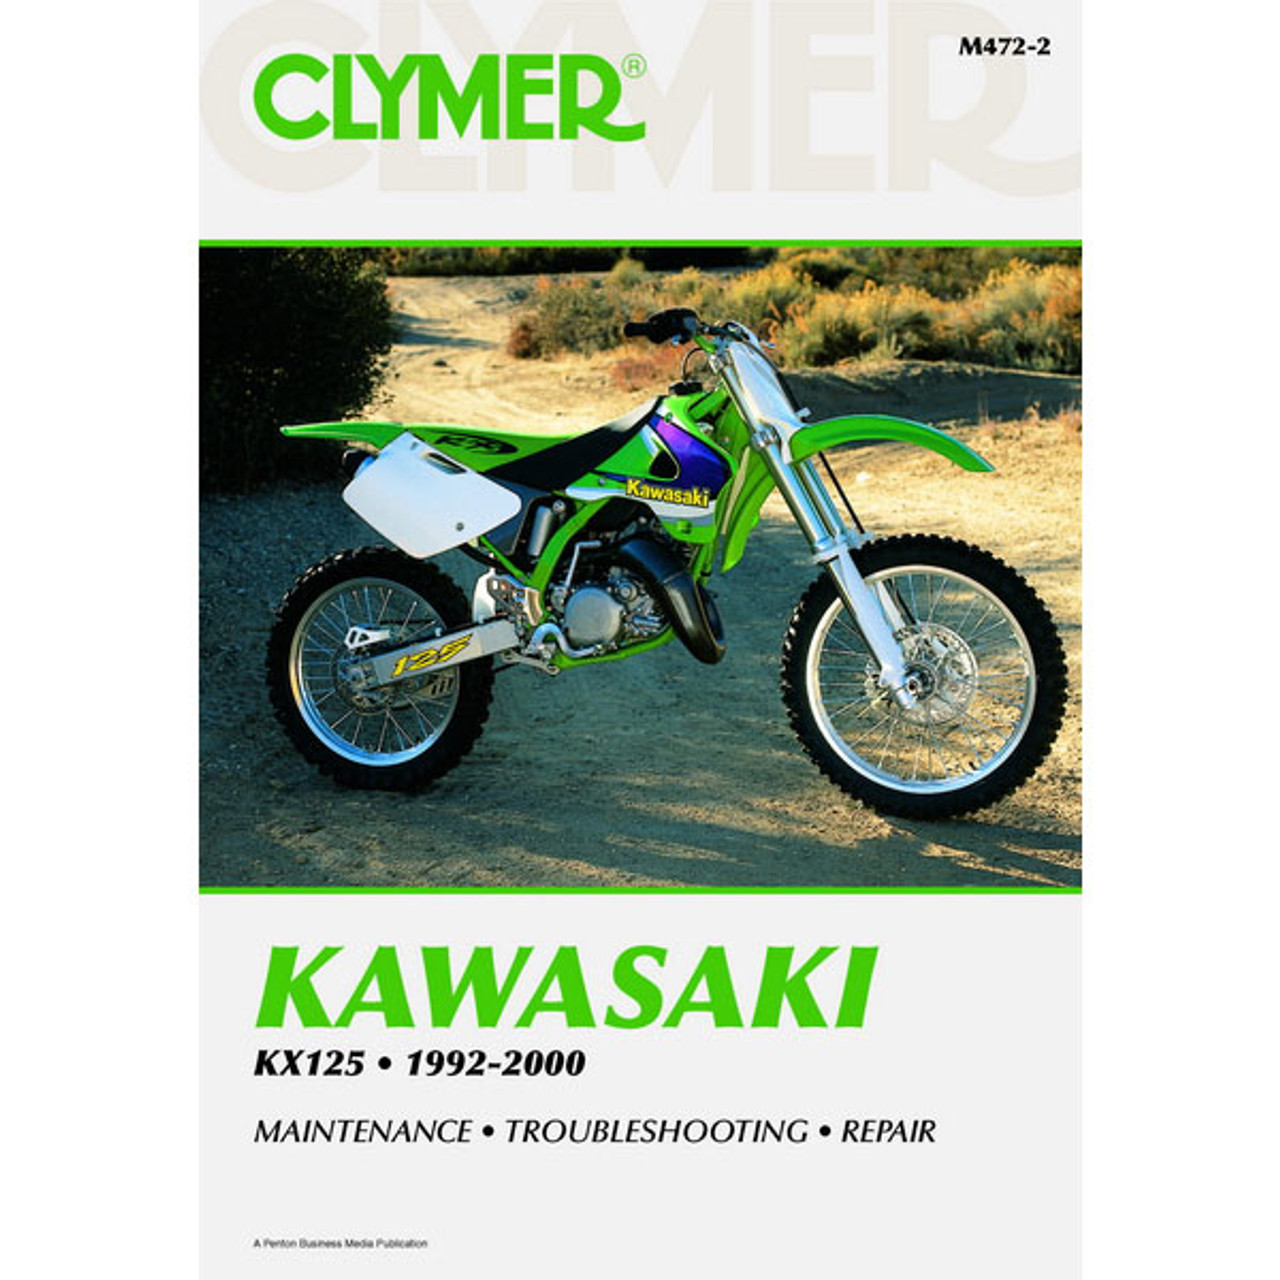 krig to administration Clymer Kawasaki KX125 92-00 Service Manual - Sportbike Track Gear